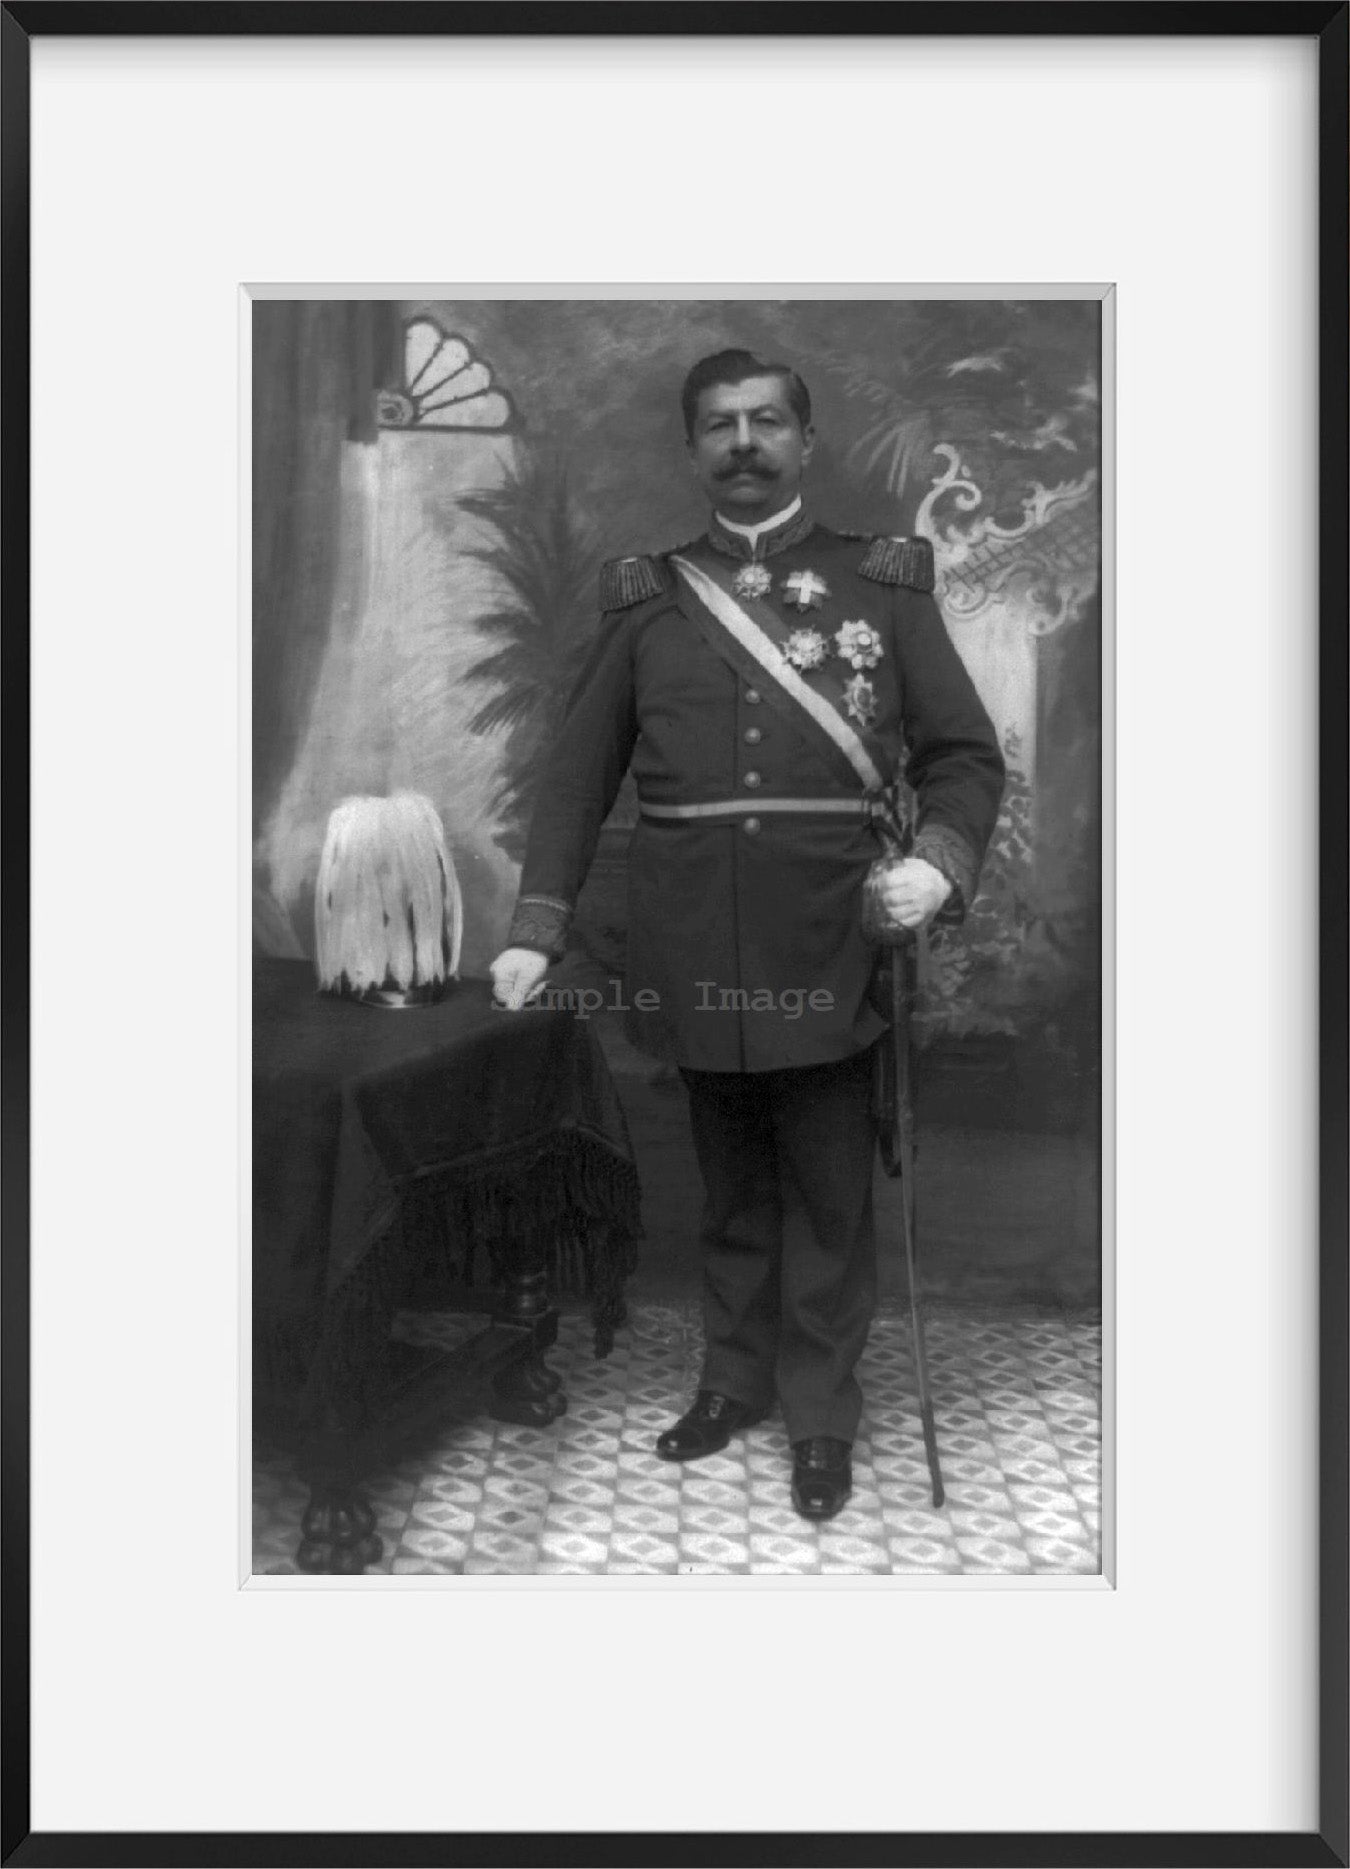 Photo: Juan Vicente Gomez Chacon, 1857-1935, military general